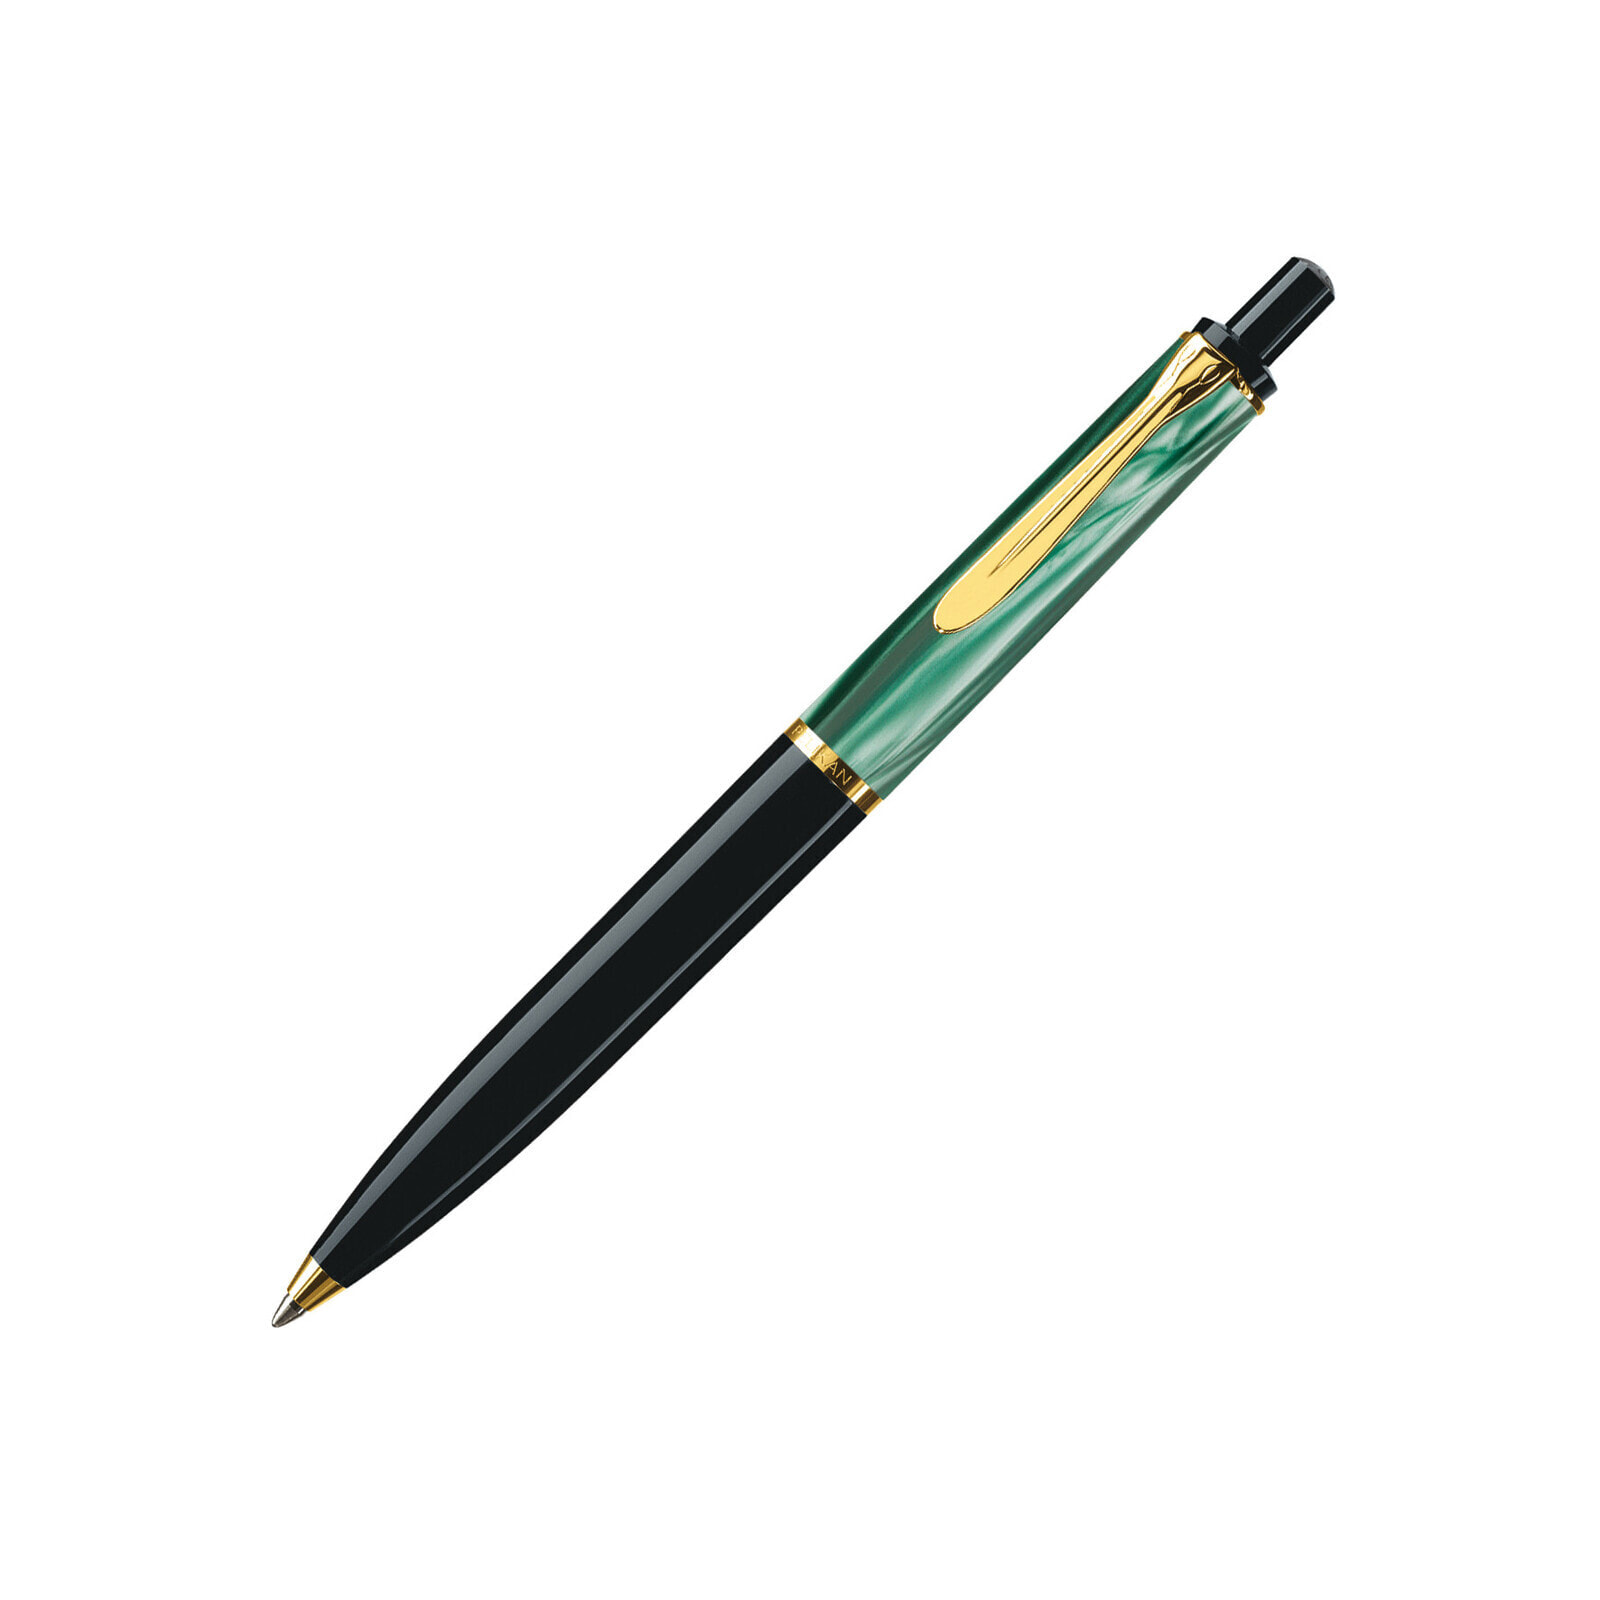 Kugelschreiber K200 Gruen-Marm. Etui